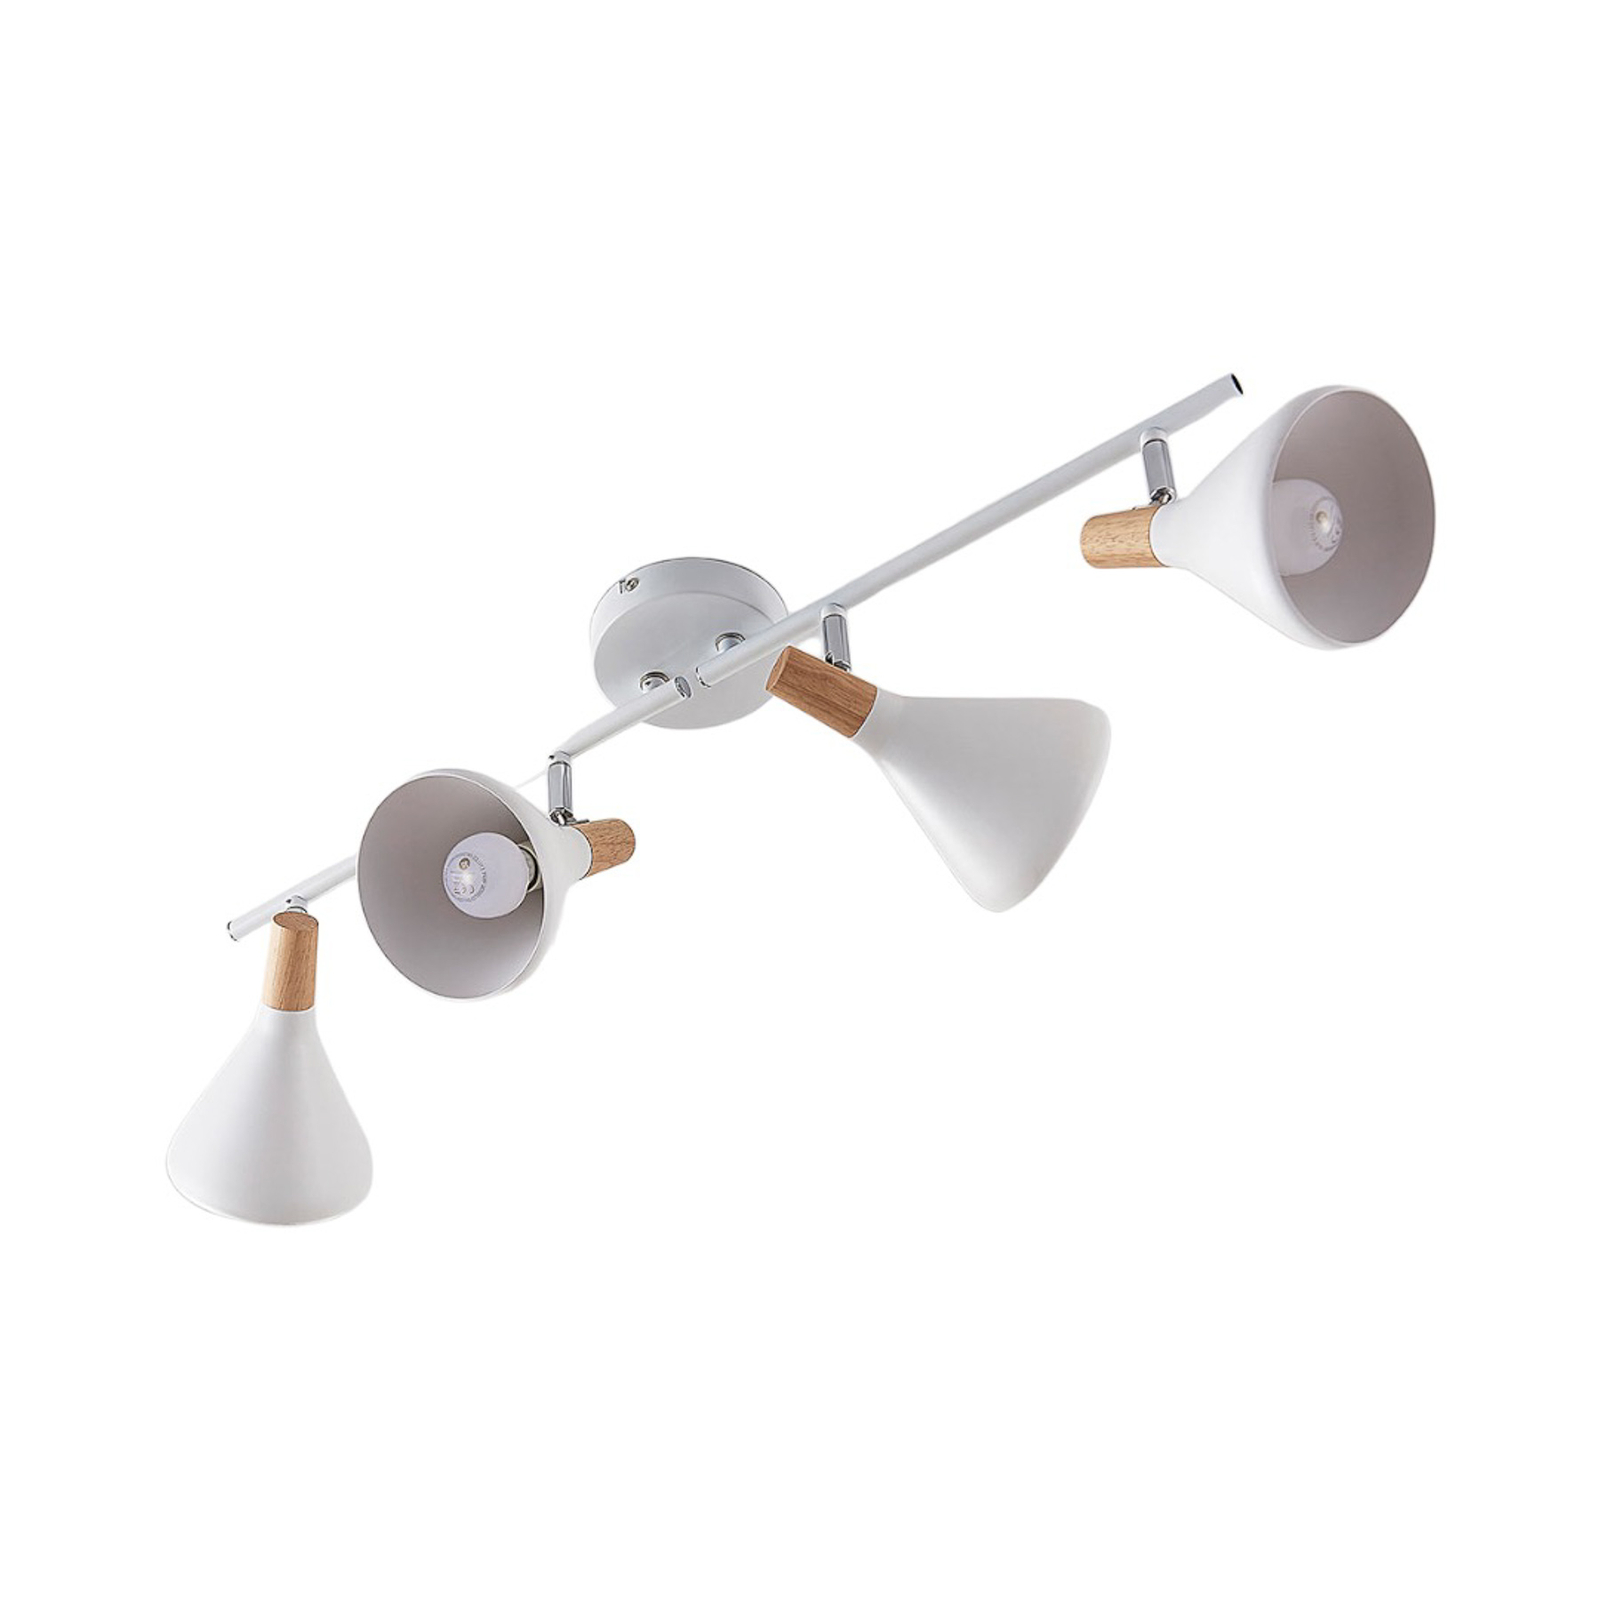 Plafondlamp Arina in wit, 4-lamps